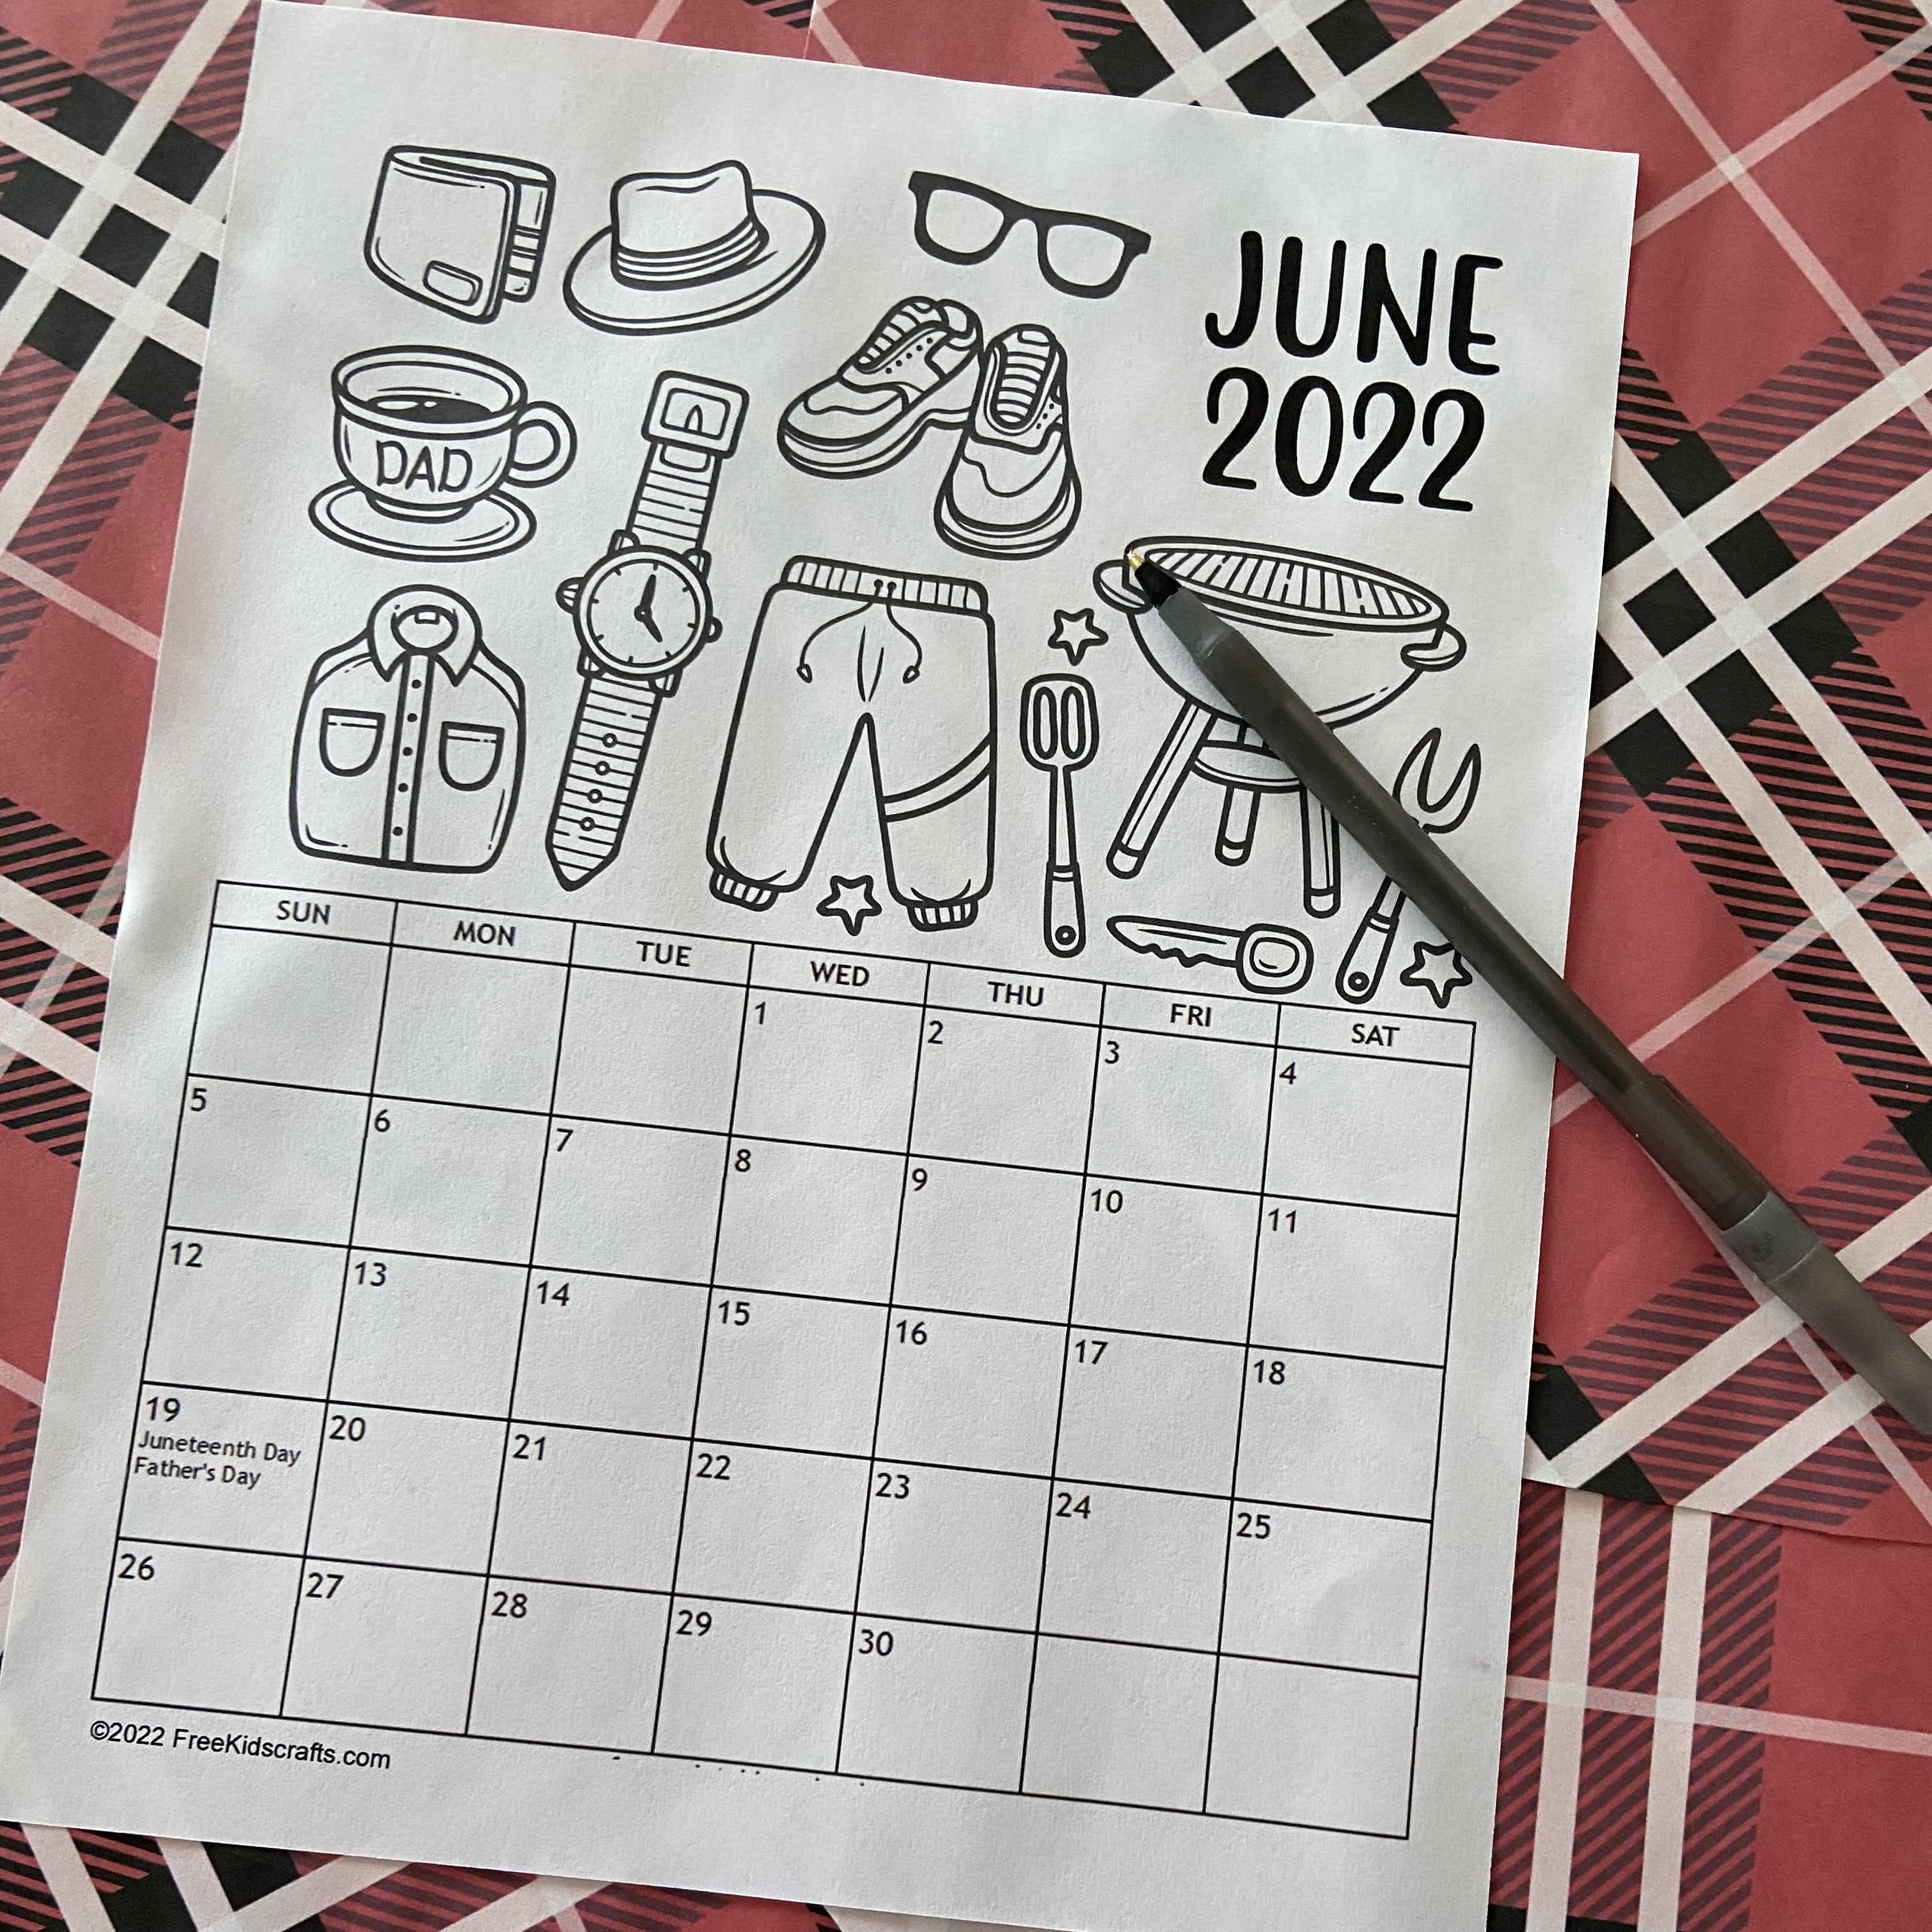 June 2022 Coloring calendar for children